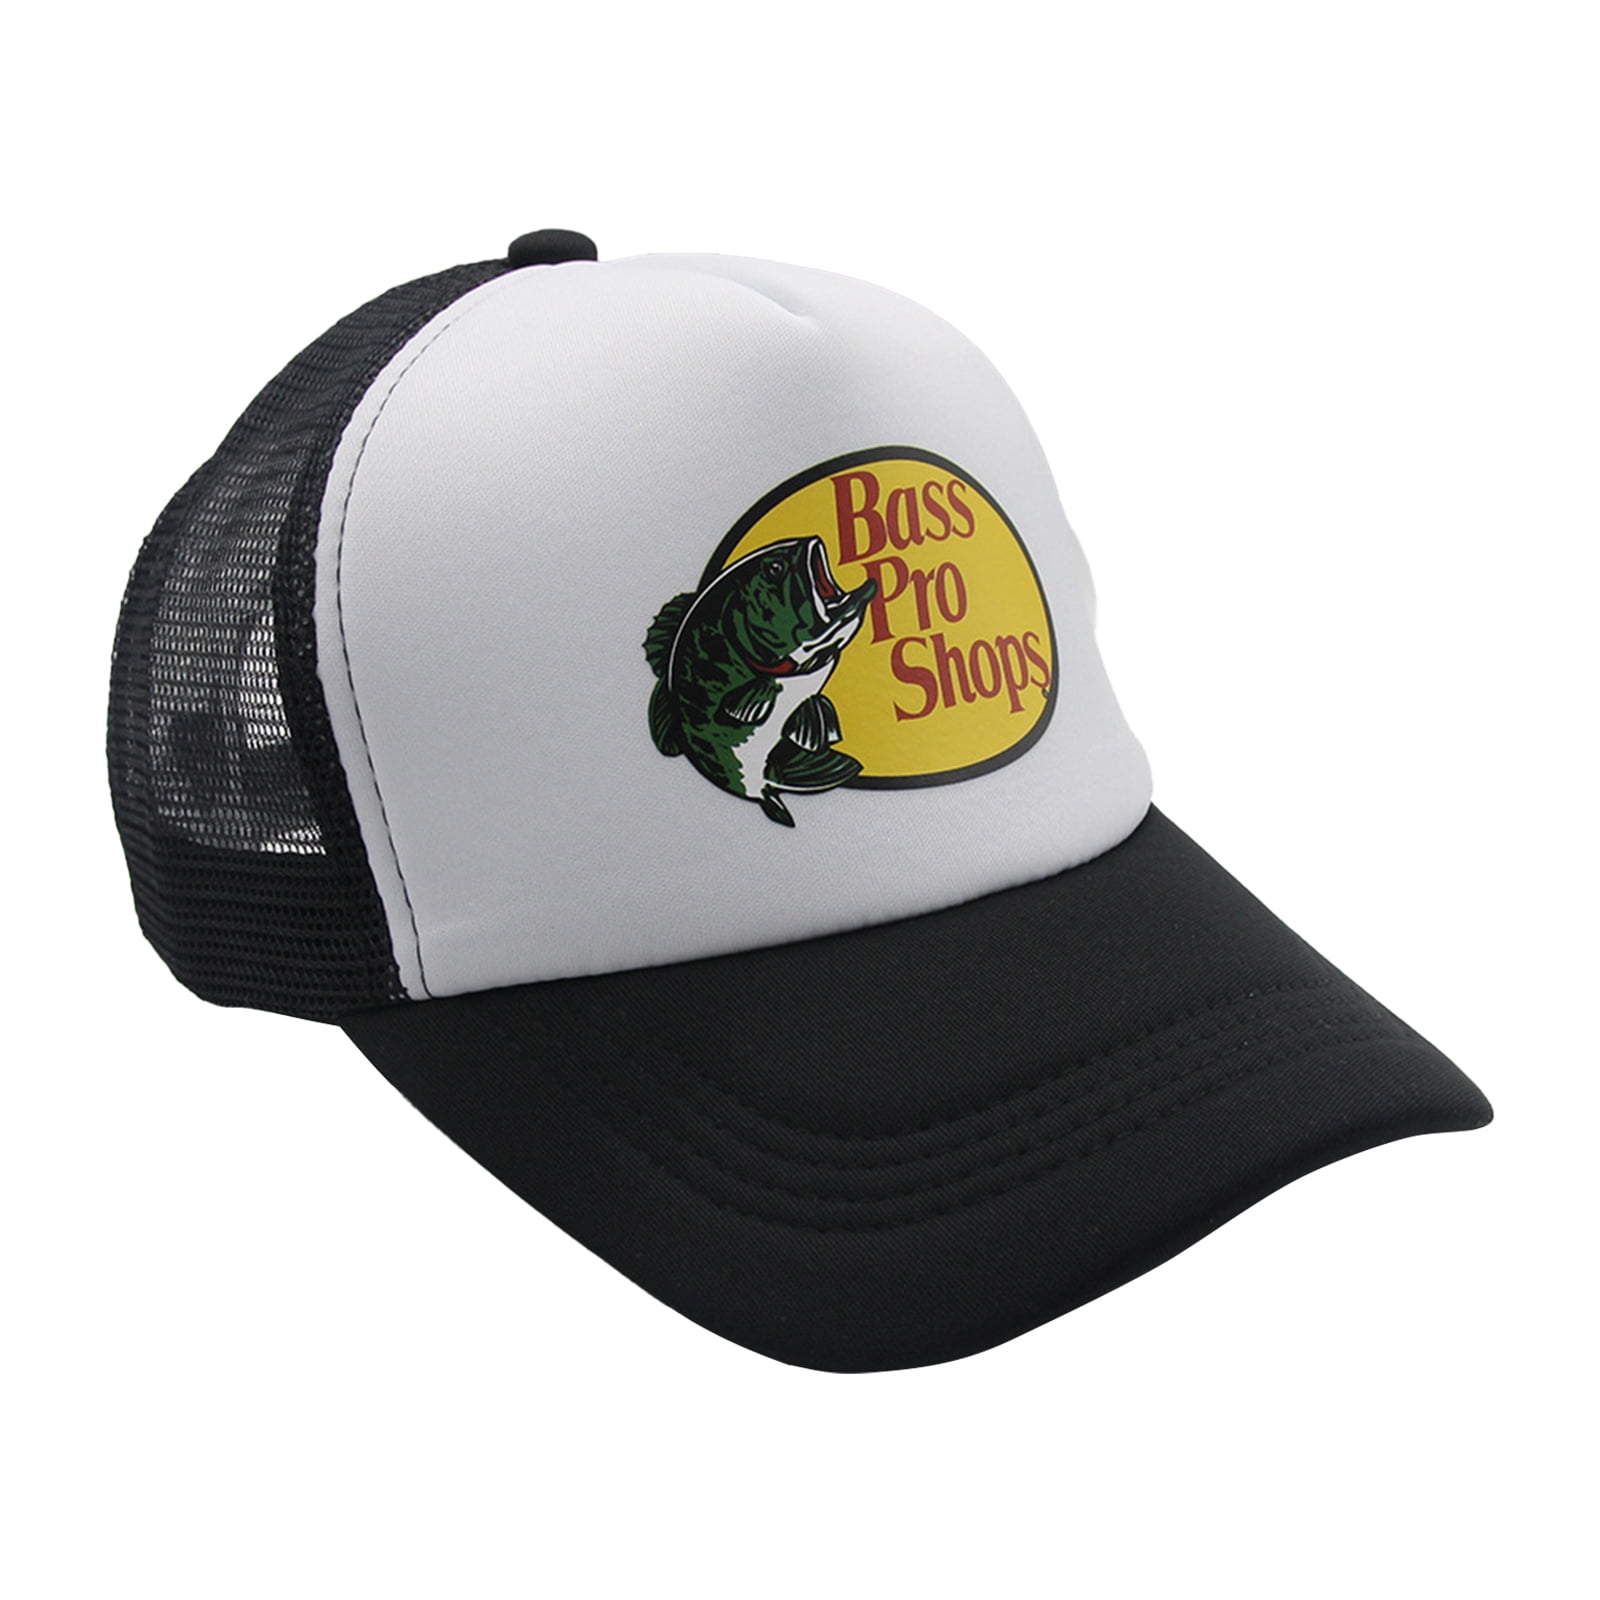 Moobom Bass Pro Shops Hat Mesh Adjustable Snapback Trucker Baseball Fishing Outdoor Cap, Men's, Size: 56, Black